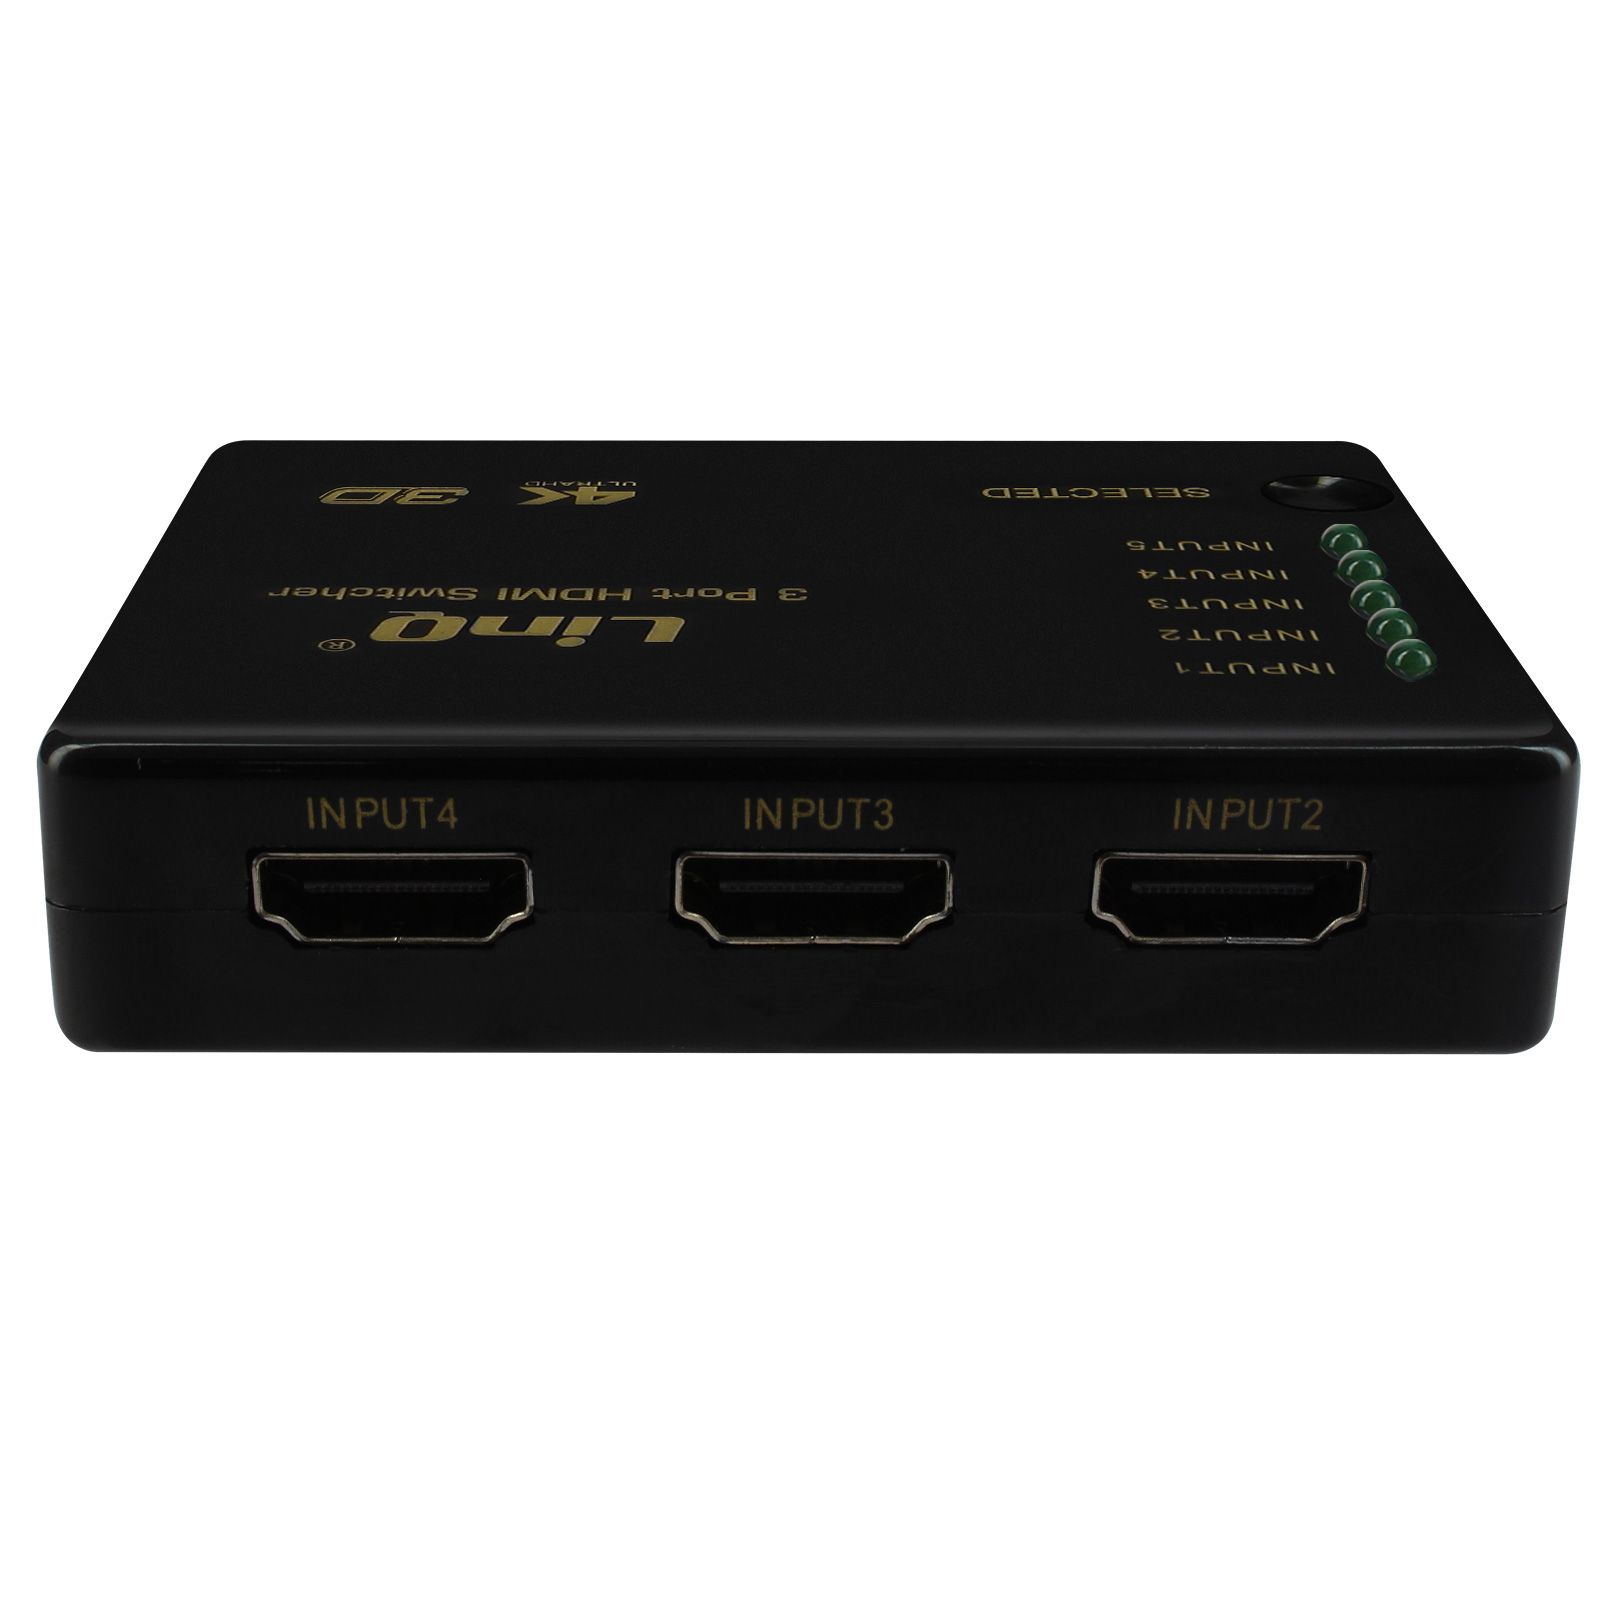 LINQ HDMI-Switch 5 Schwarz Full Universal, Anschlüsse HD HDMI Splitter-Adapter